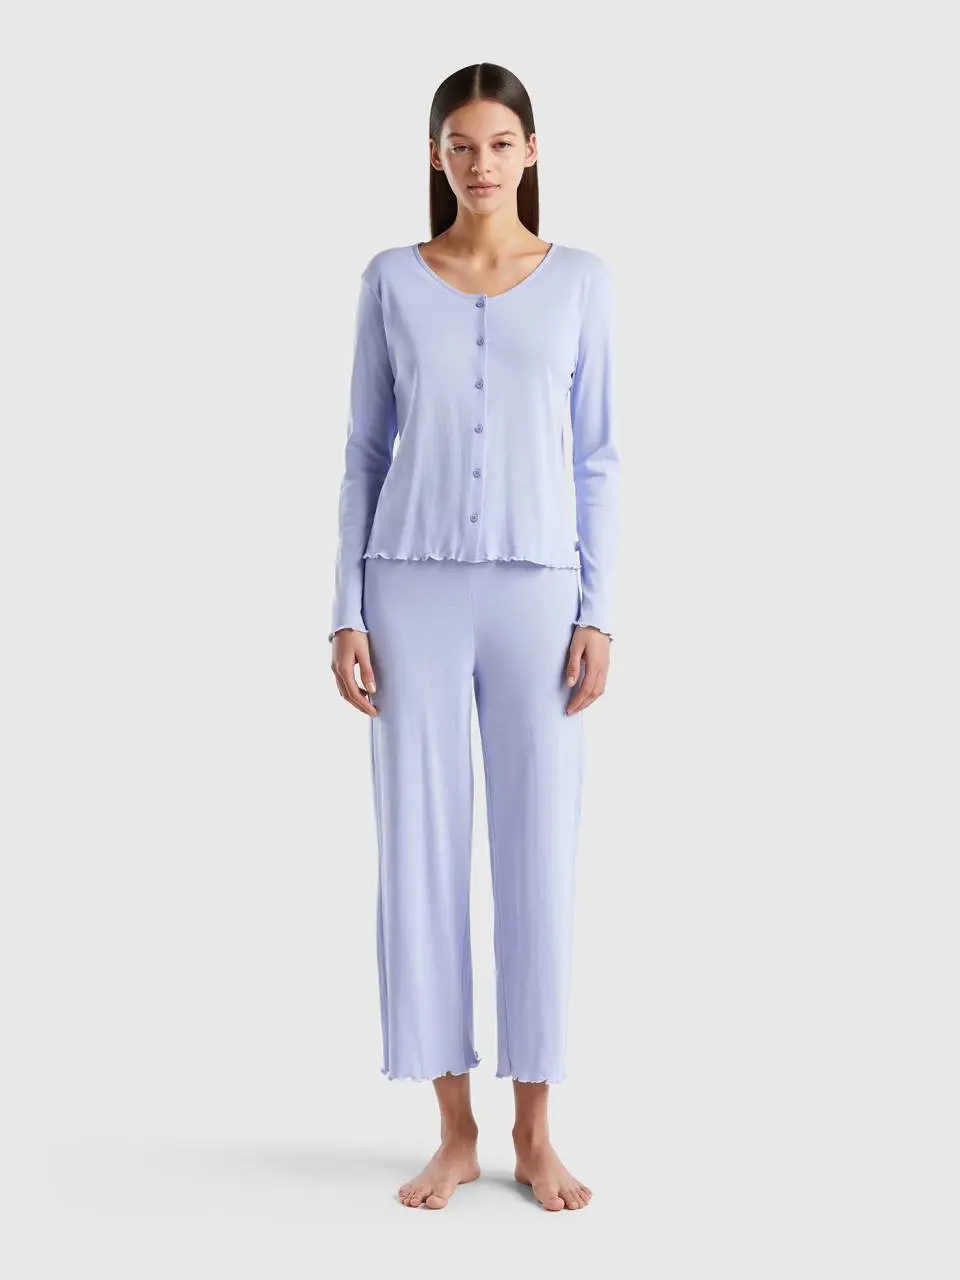 Benetton pyjamas in long fiber cotton. 1